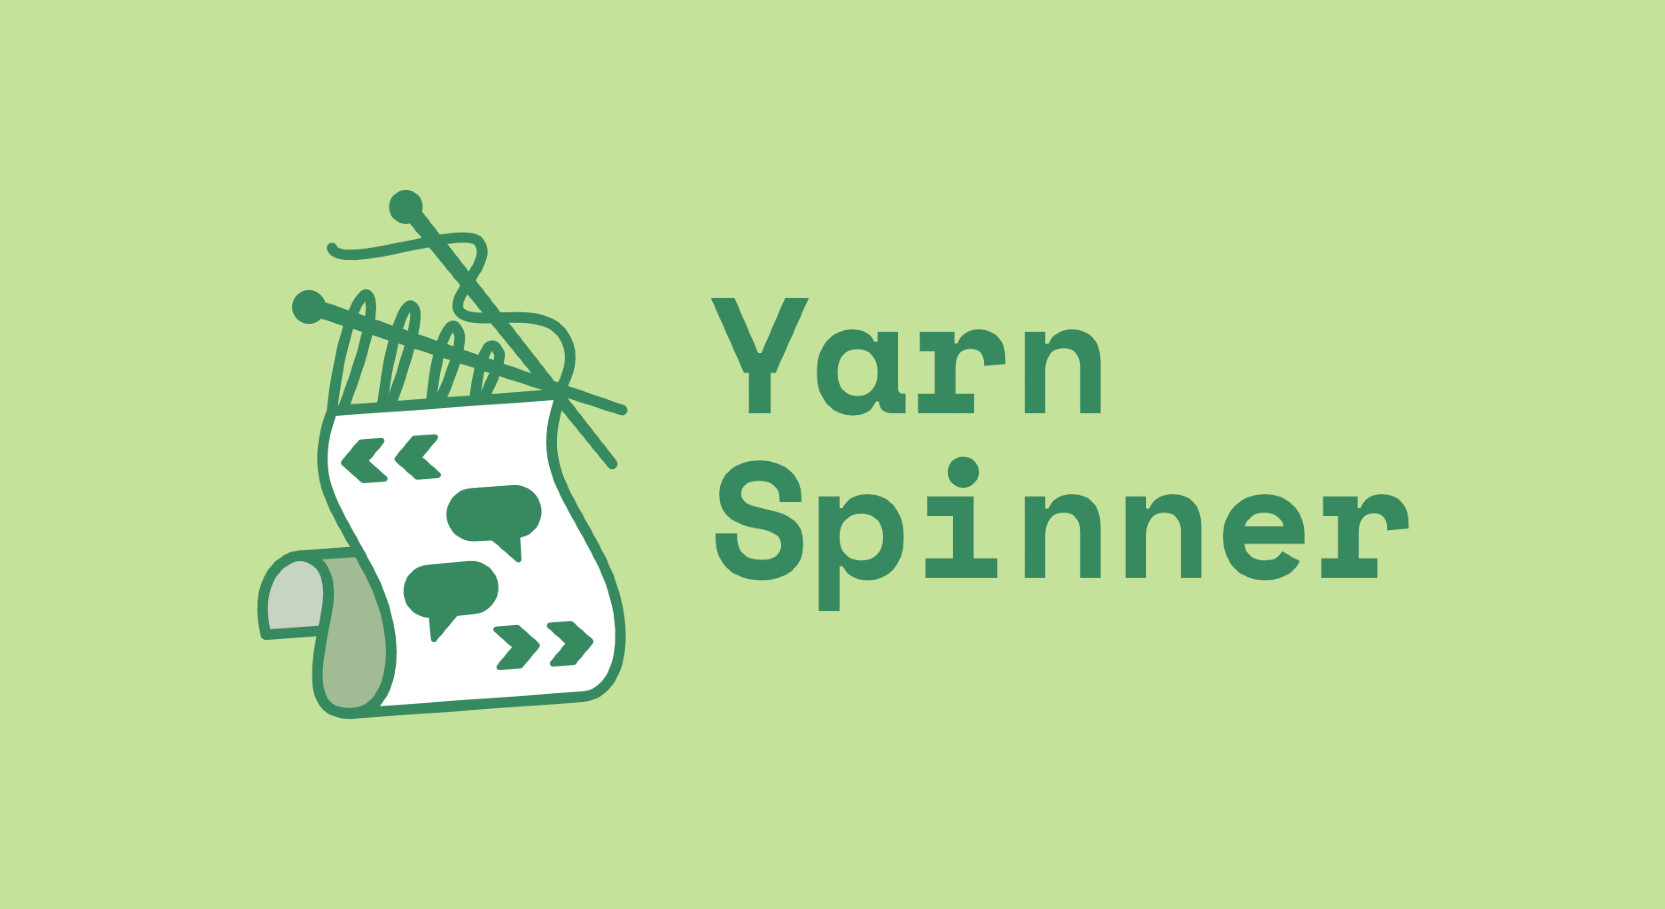  Yarn Spinner